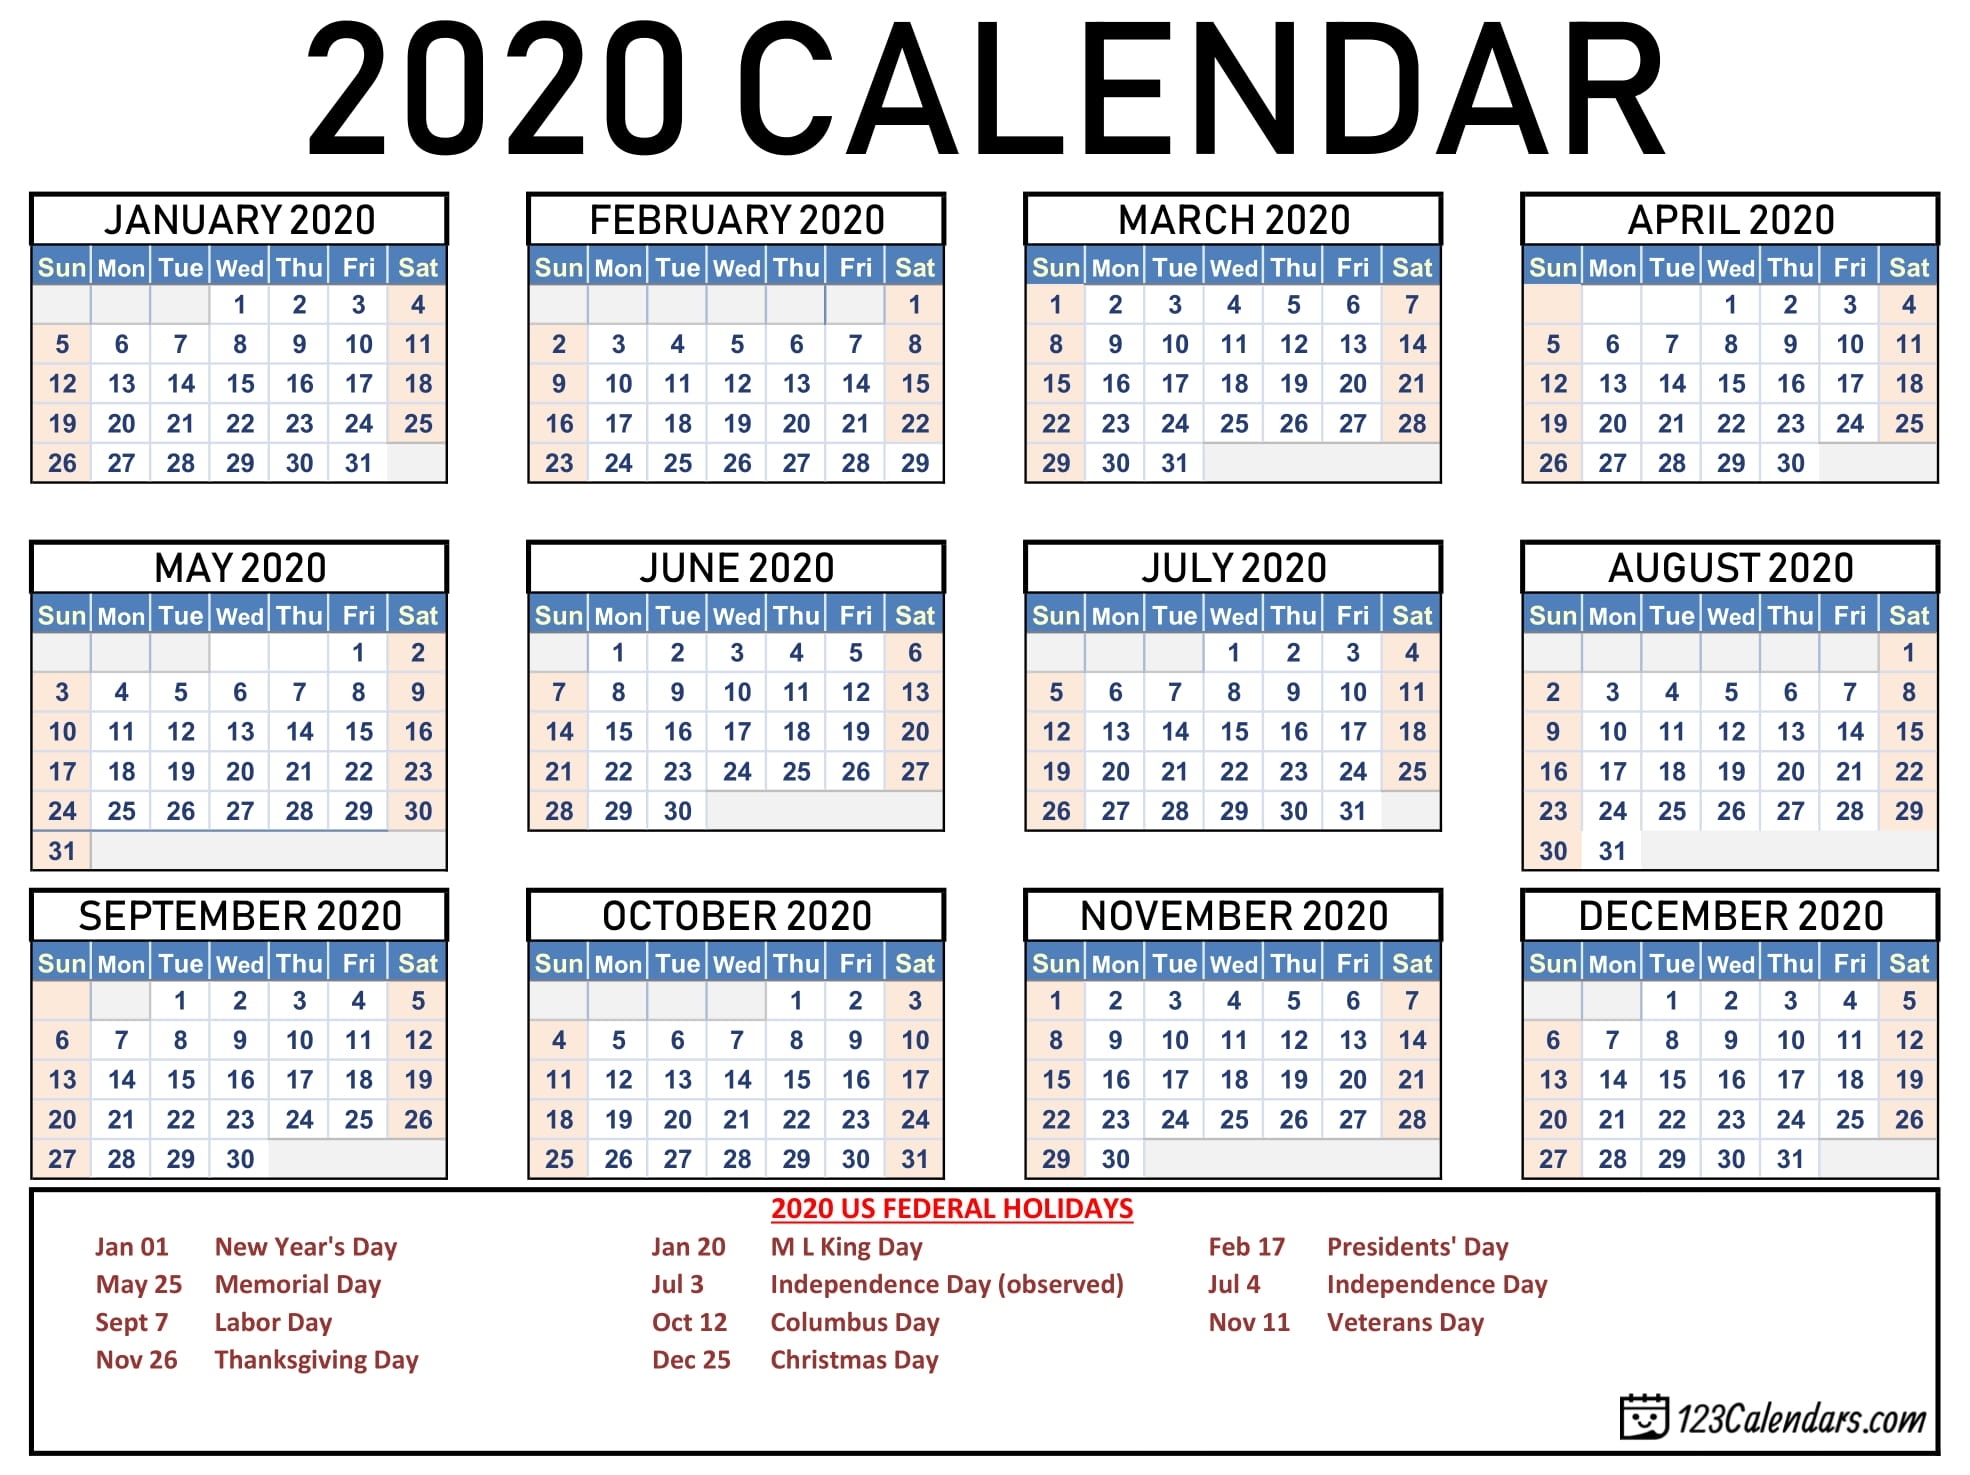 Free Printable 2020 Calendar | 123Calendars Extraordinary 2020 Calendar Printable With Holidays